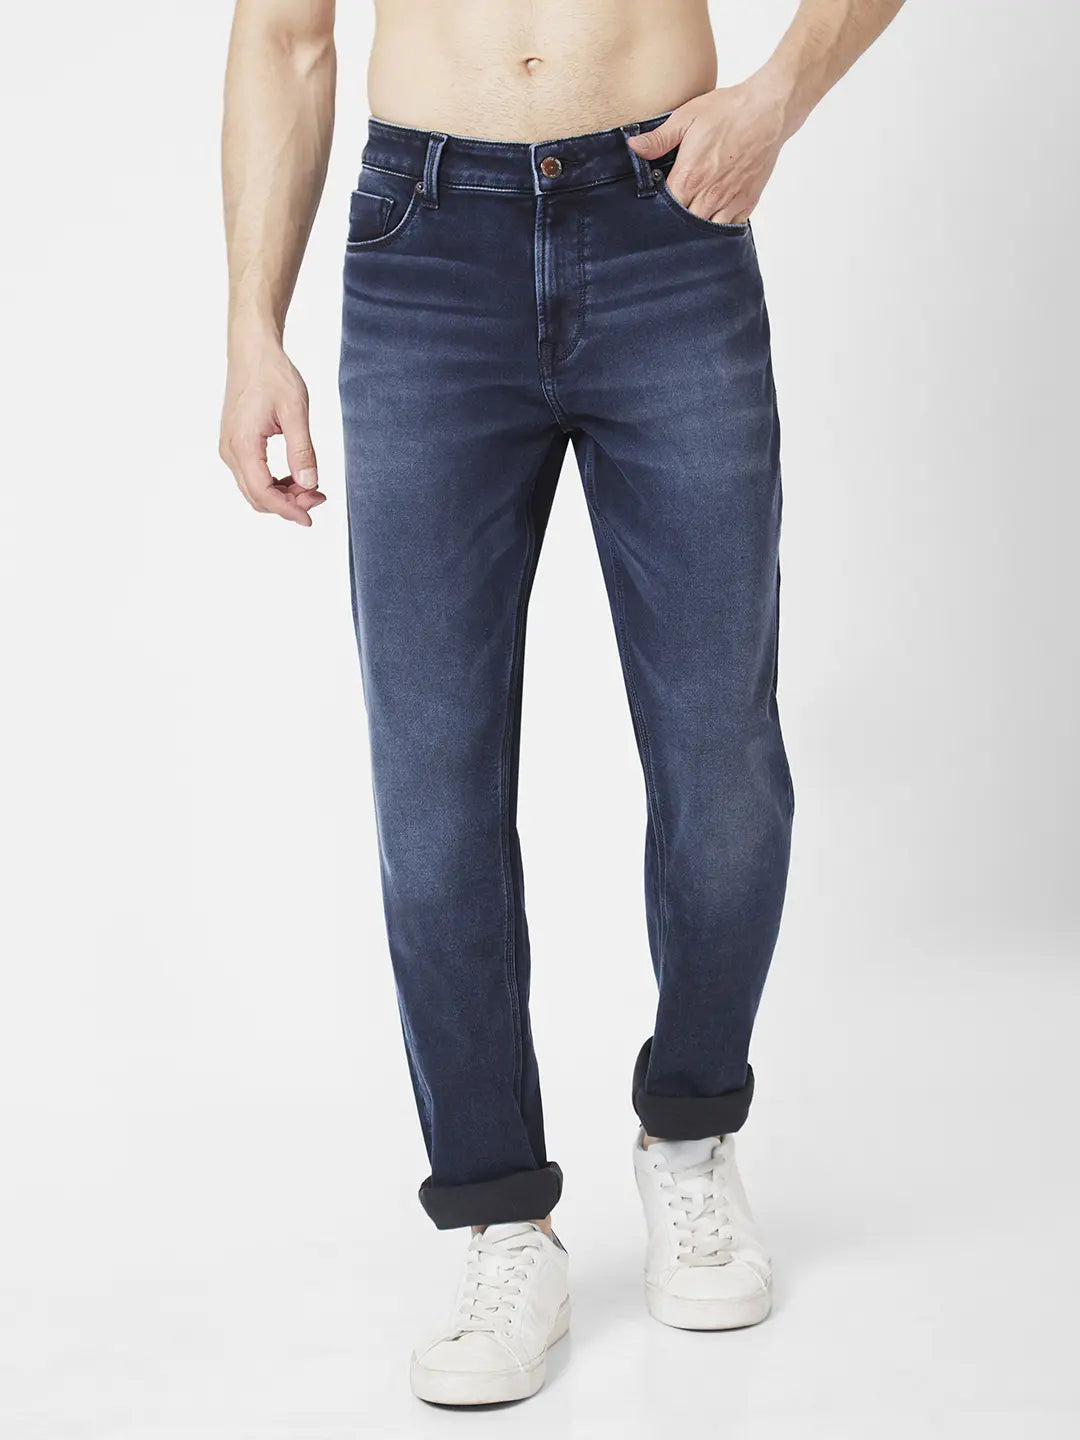 Spykar Men Black Indigo Cotton Stretch Comfort Fit Straigth Length Clean look Mid Rise Jeans (Ricardo)